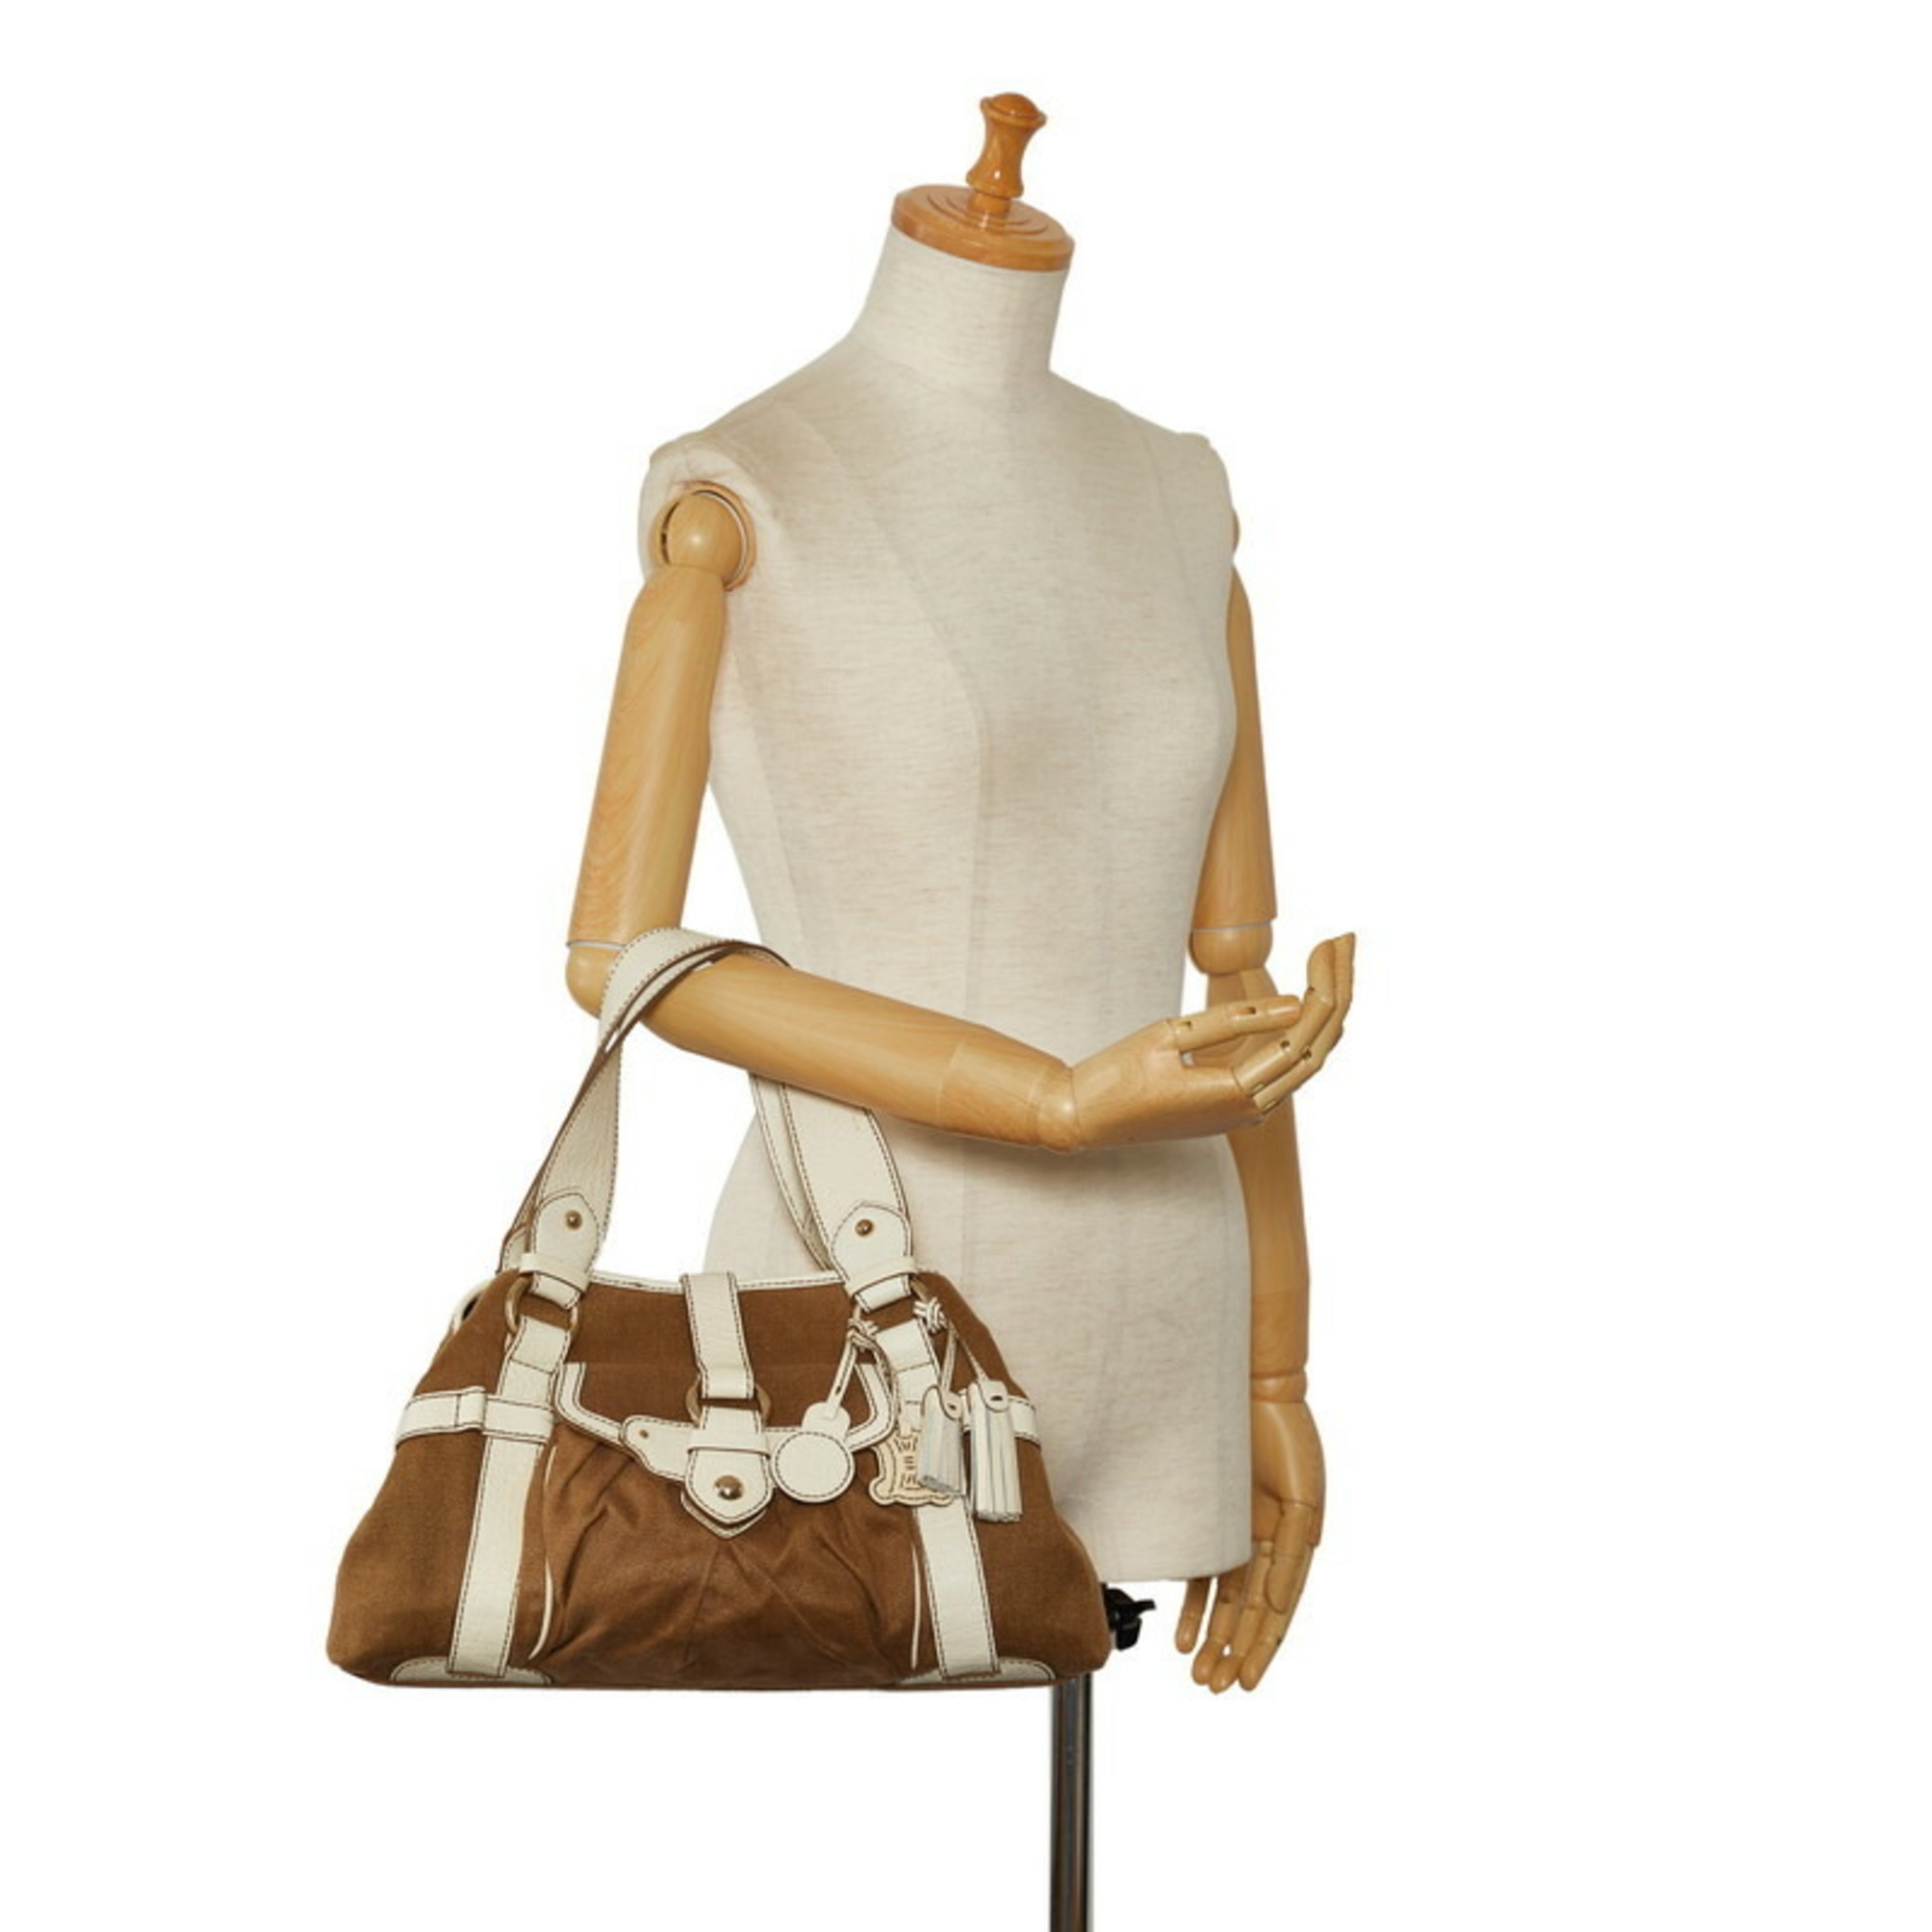 Celine Handbag SC-SA-1016 Brown White Canvas Leather Women's CELINE